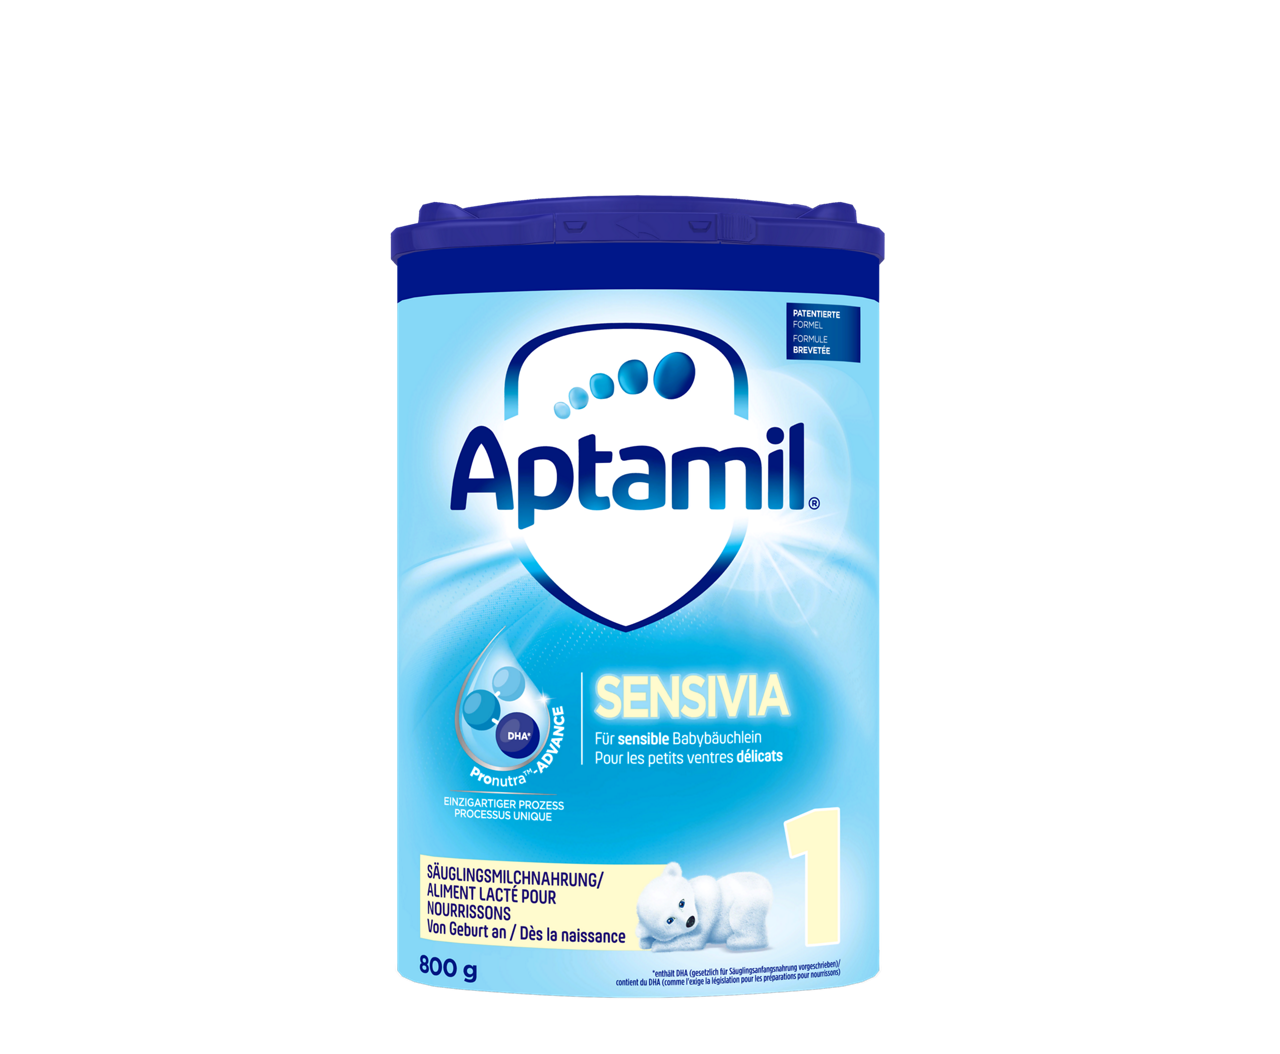 Aptamil product Sensivia 1